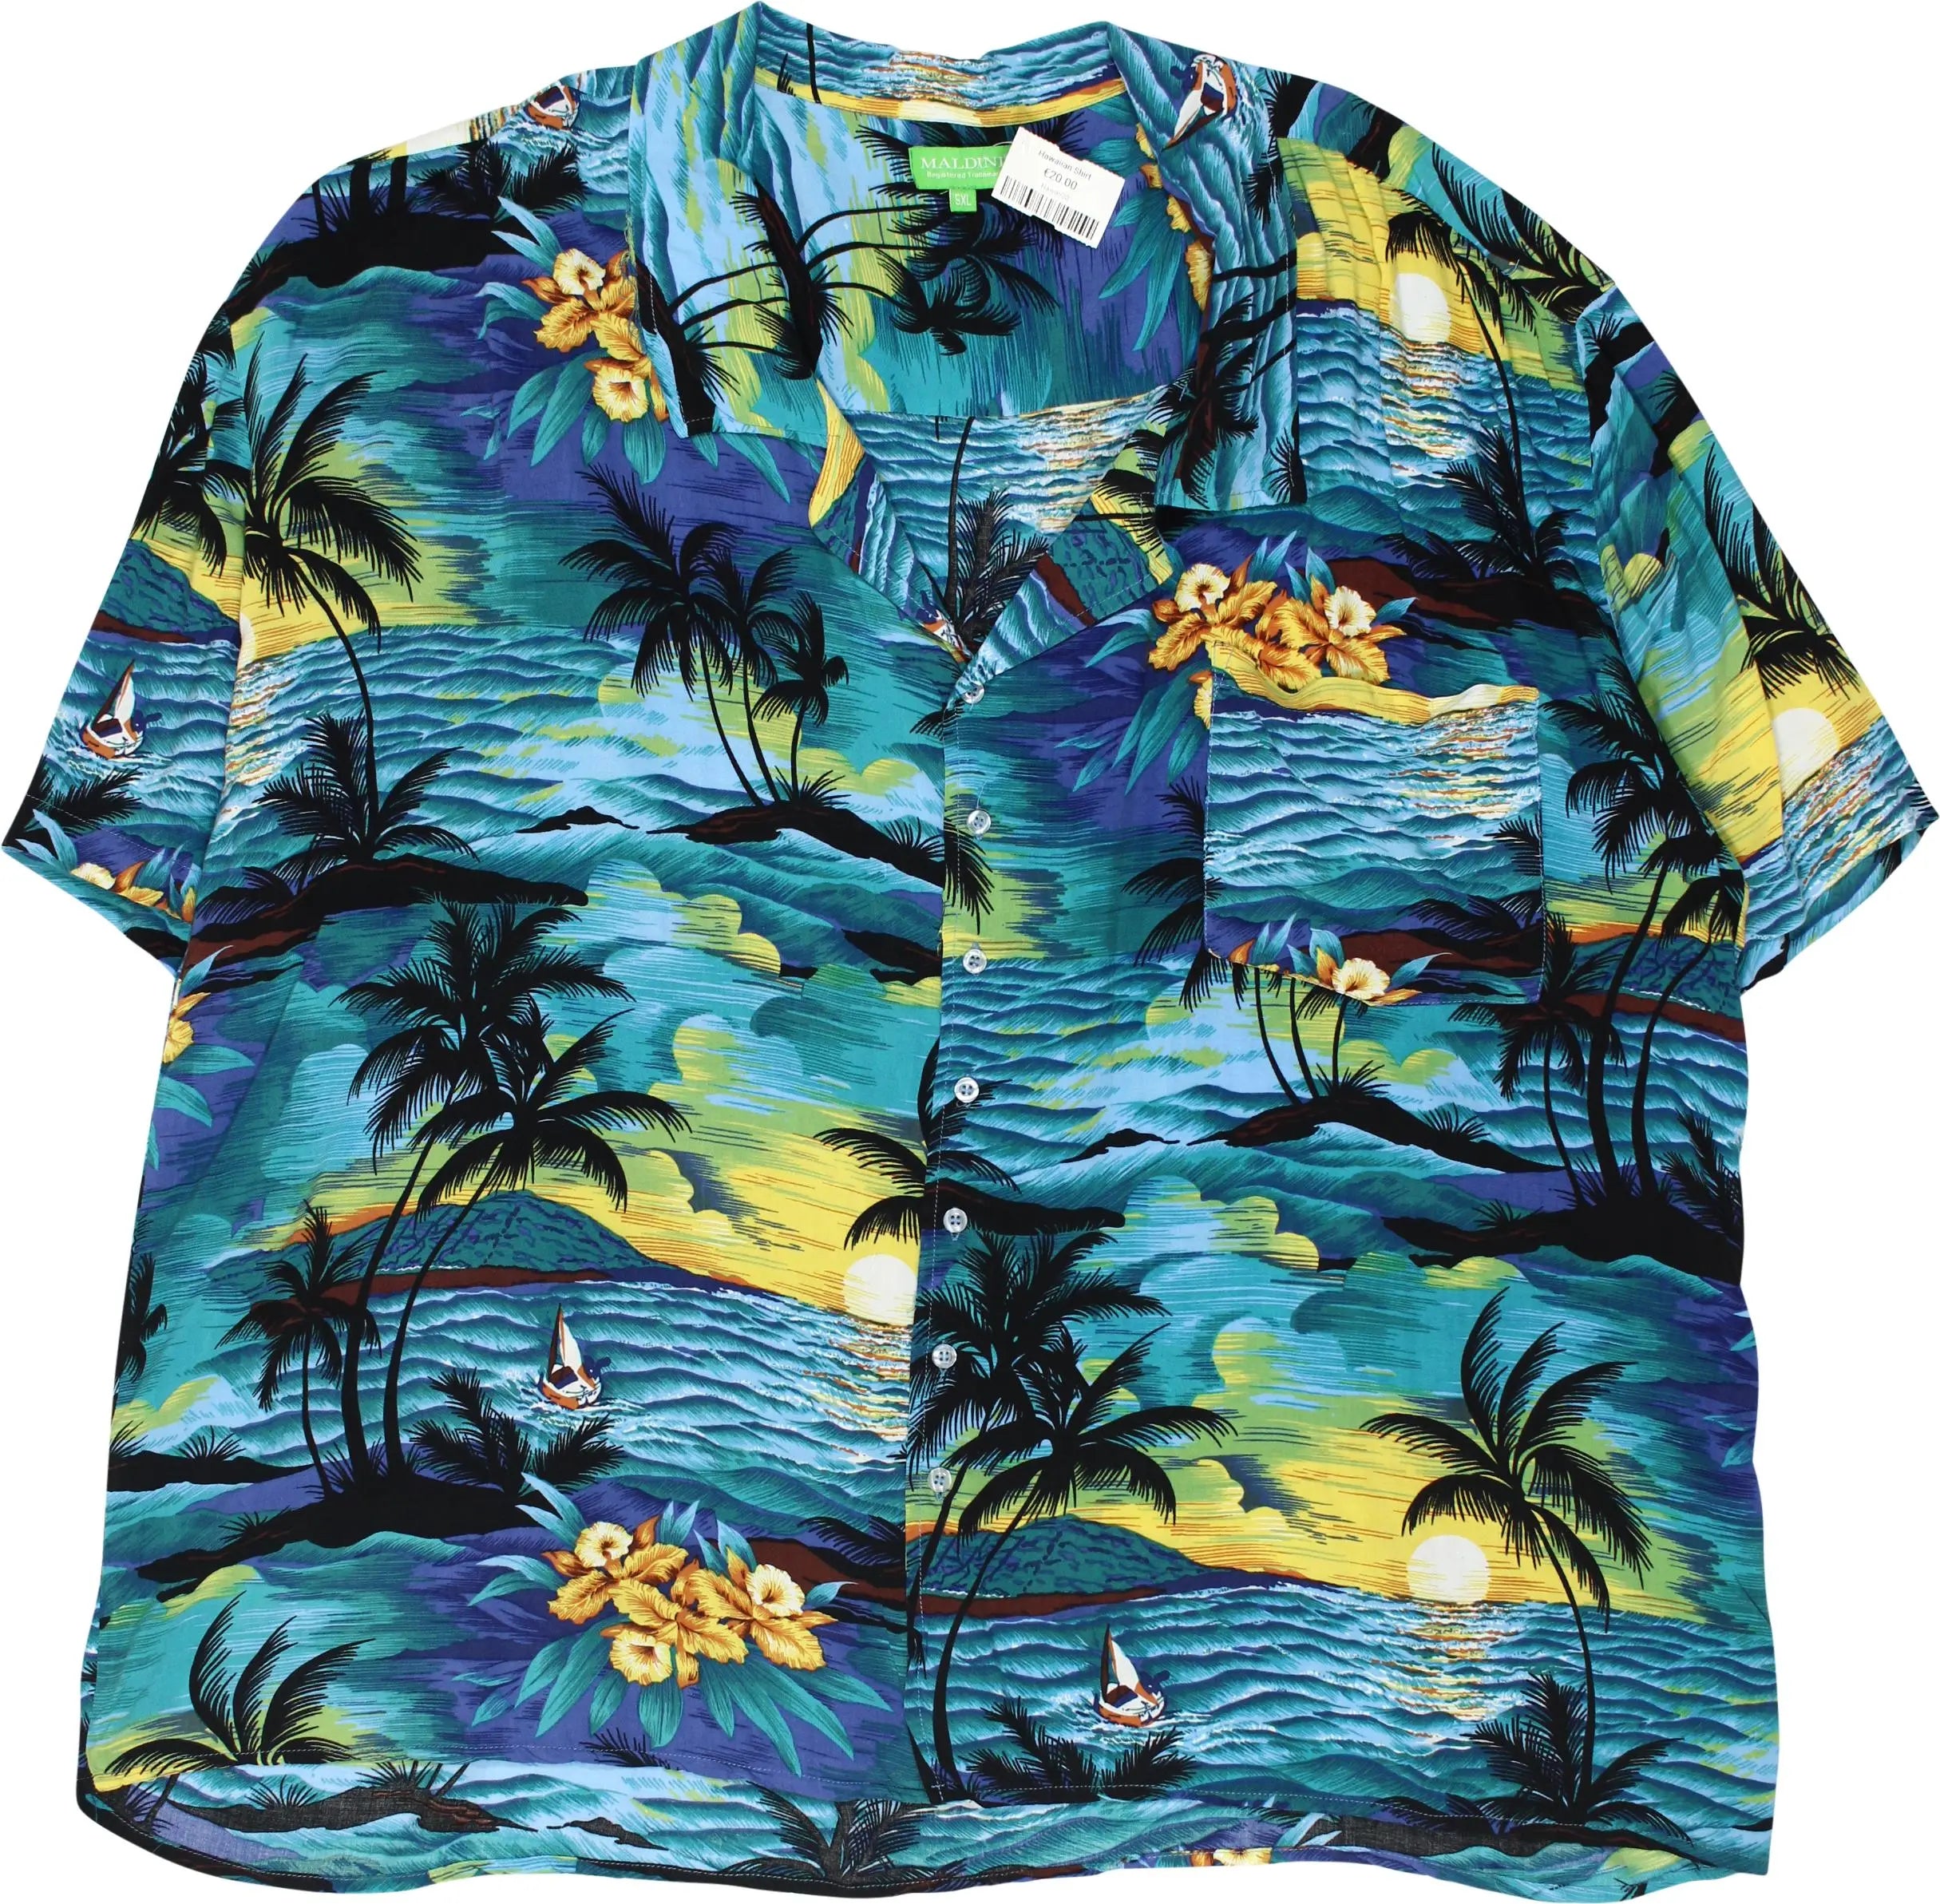 Maldint - Hawaiian Shirt- ThriftTale.com - Vintage and second handclothing